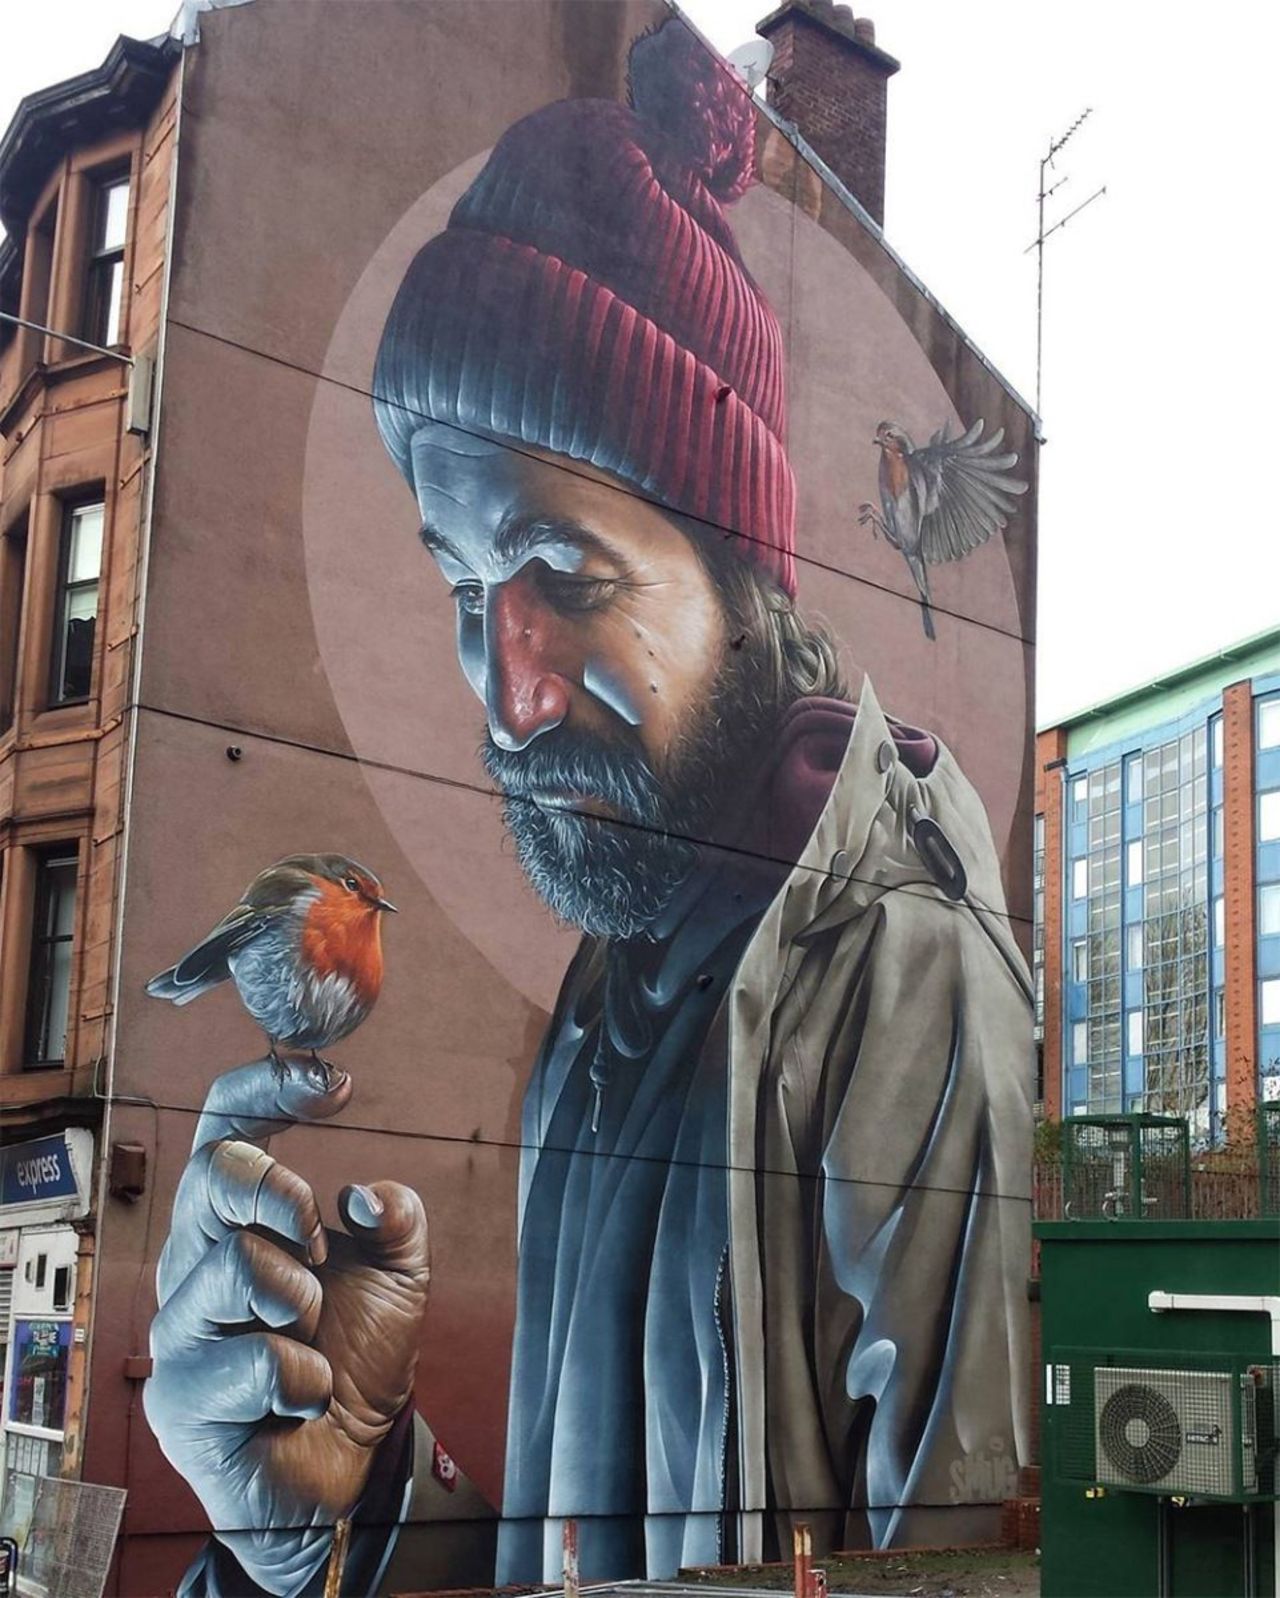 Glasgow street art guide and interactive Map - http://buff.ly/2tf3GnQ#Artist #Art #StreetArt #Graffiti https://t.co/cCFKZ9pwGB